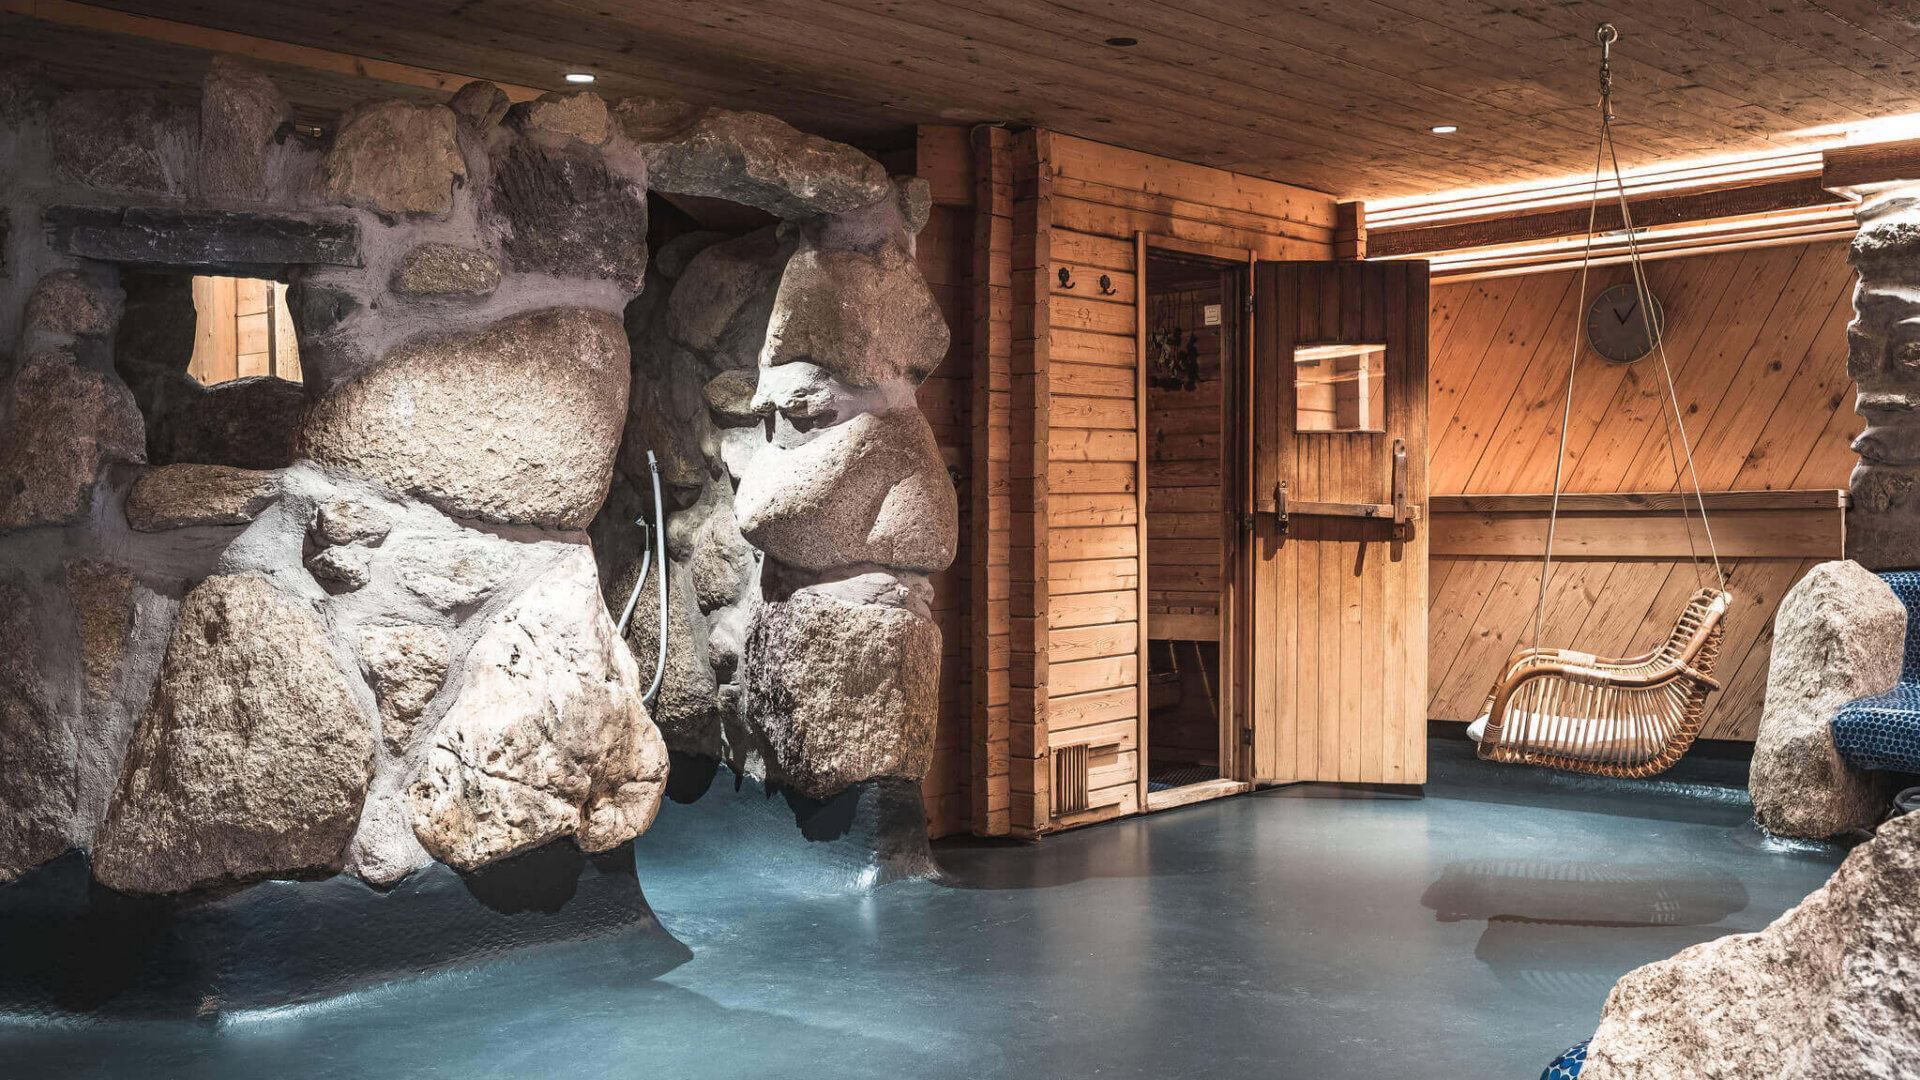 Sauna and stone shower